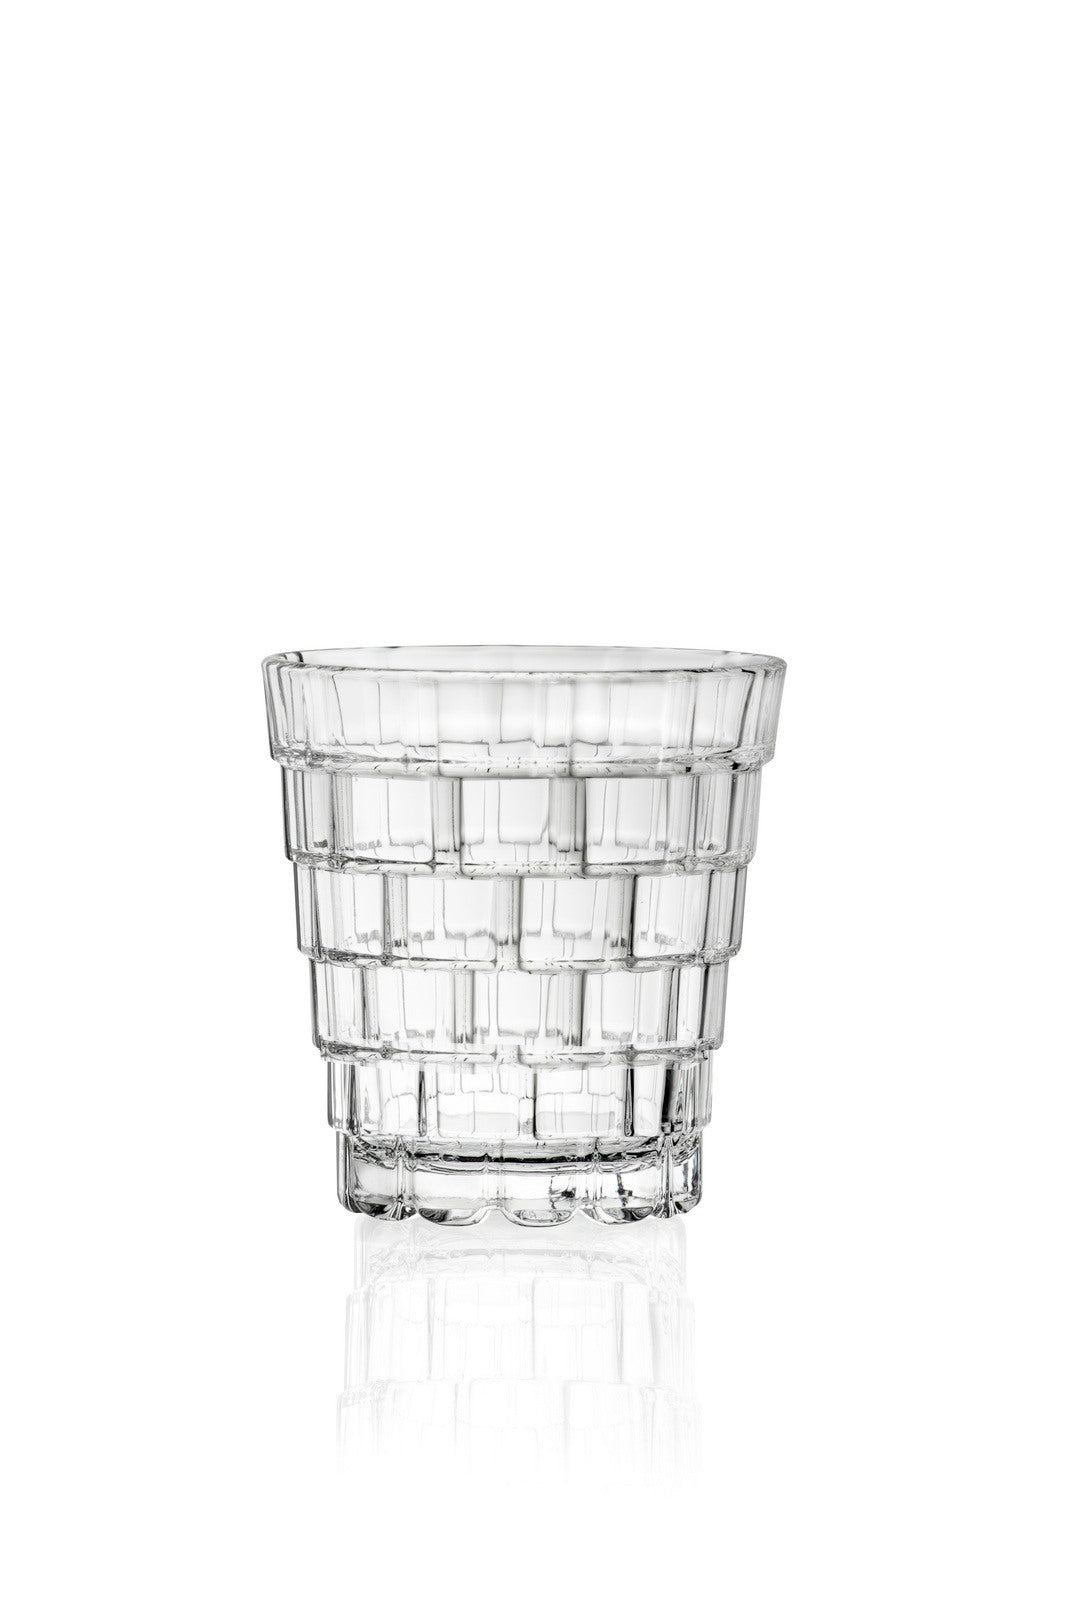 immagine-1-rcr-cristalleria-italiana-stack-dof-set-da-6-bicchieri-in-vetro